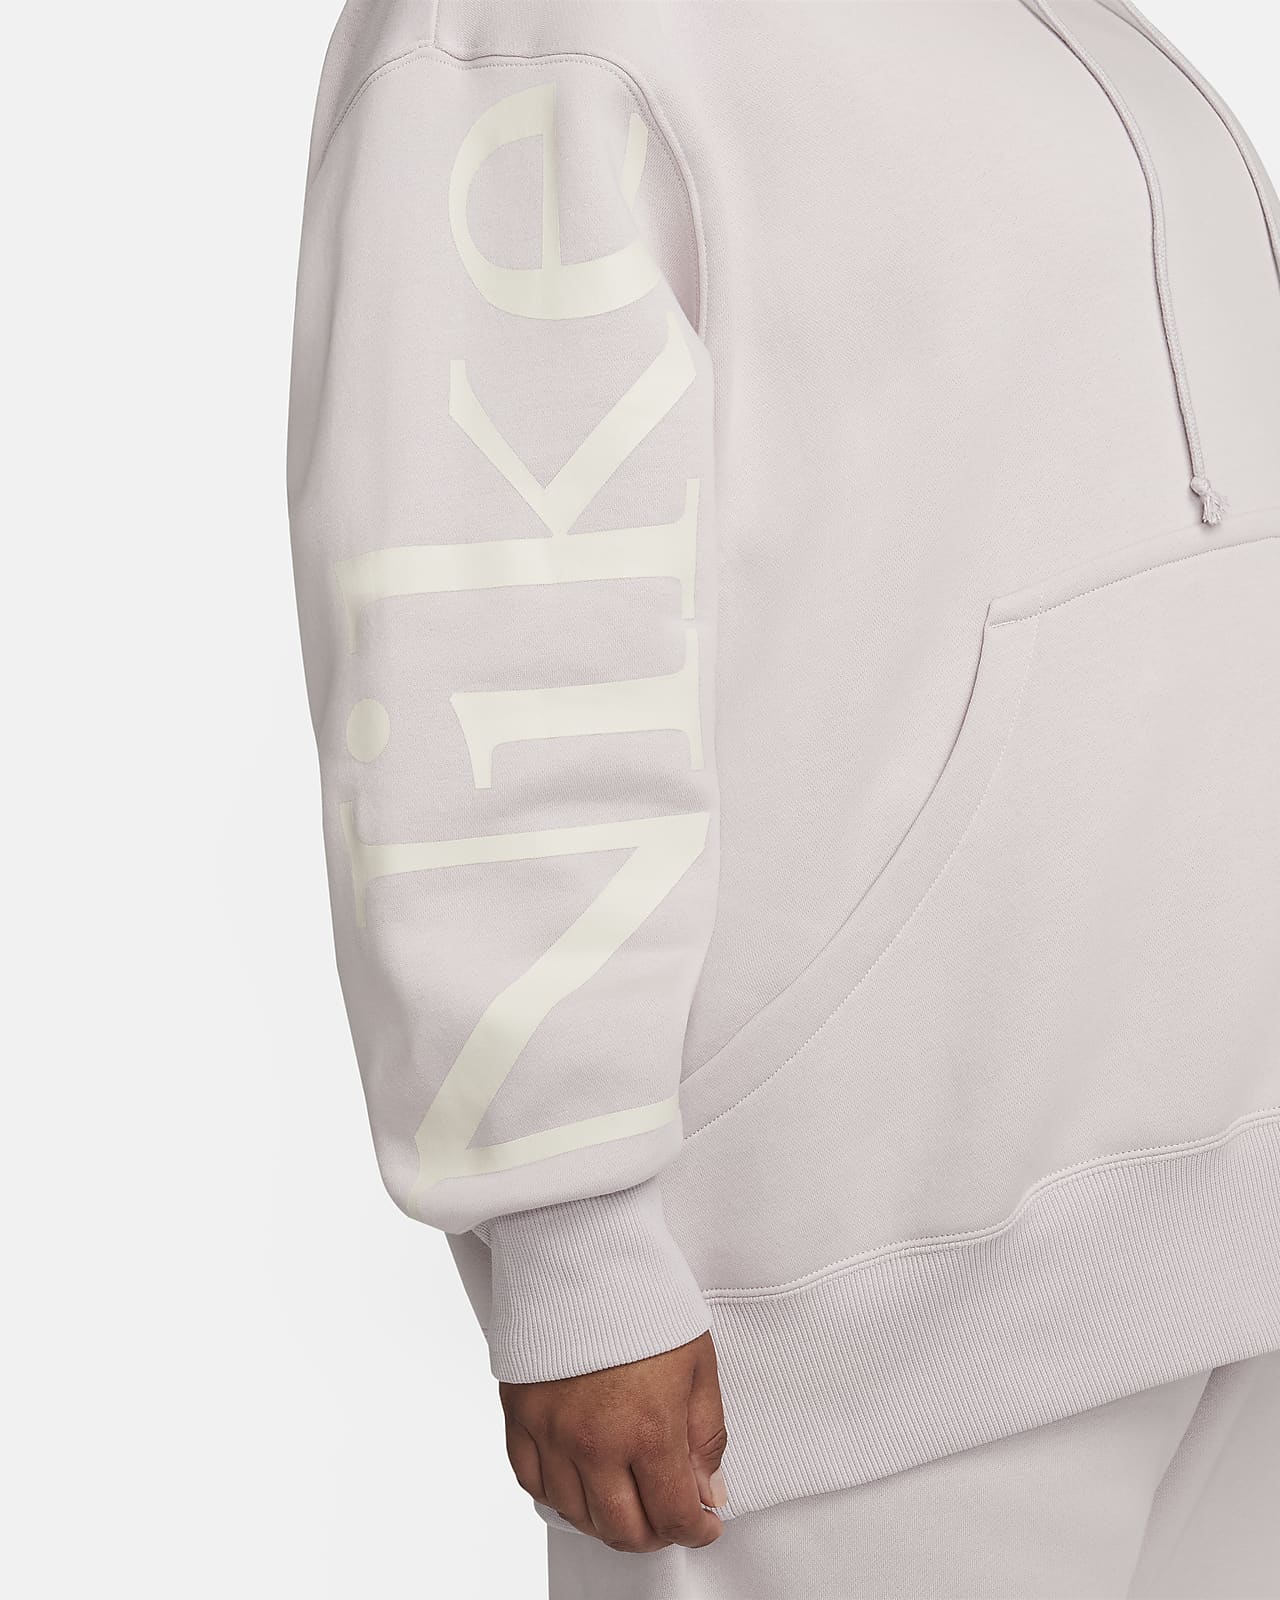 Nike Women's Sportswear Club Fleece Logo Pullover Hoodie, Pink Oxford,  X-Large at  Women's Clothing store